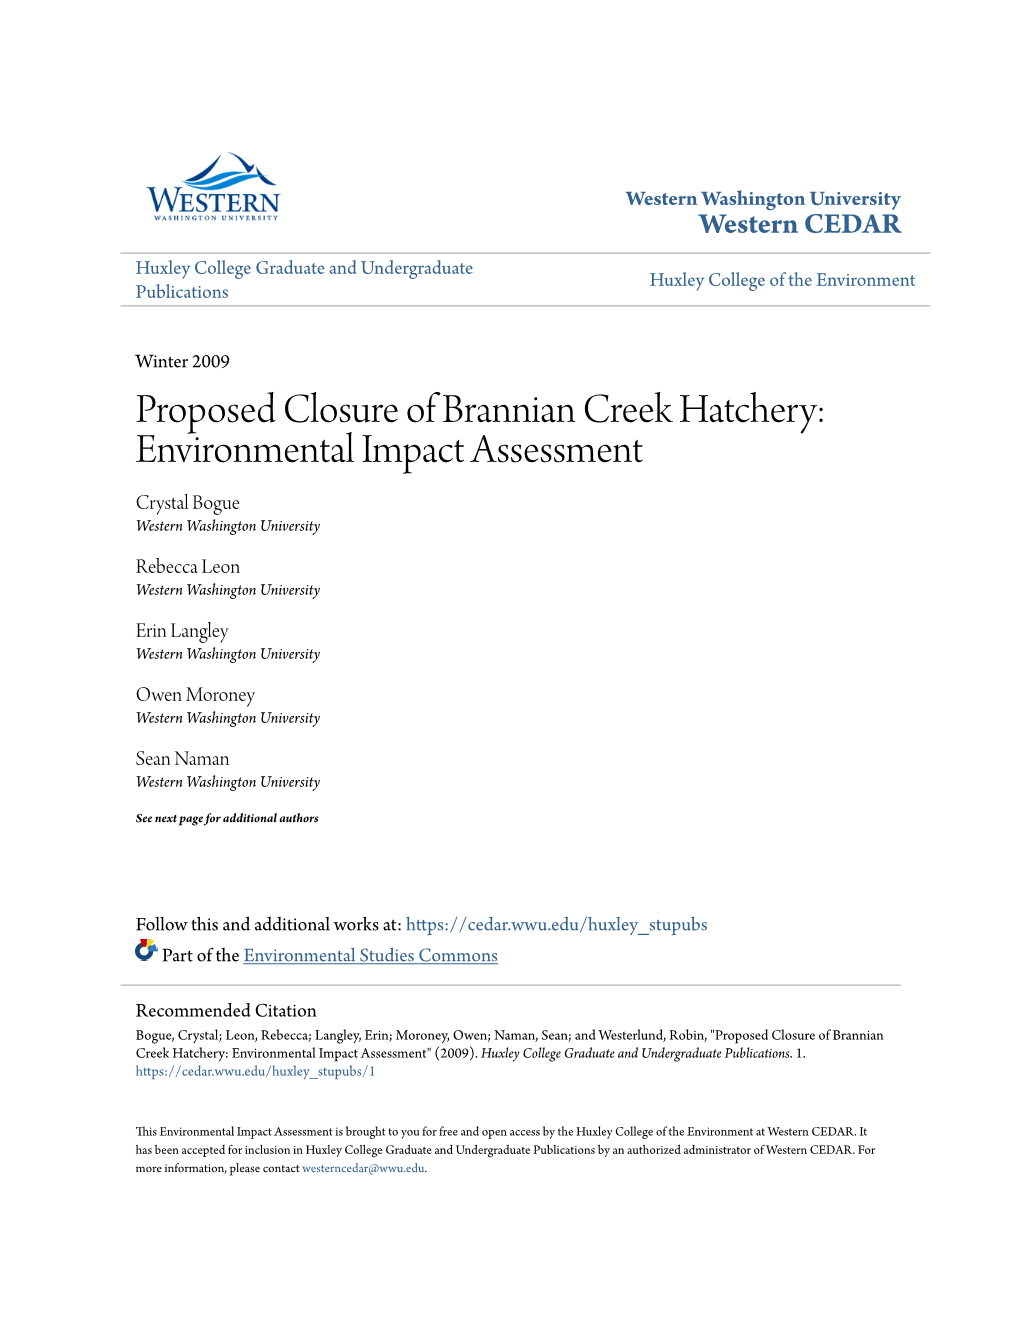 Proposed Closure of Brannian Creek Hatchery: Environmental Impact Assessment Crystal Bogue Western Washington University